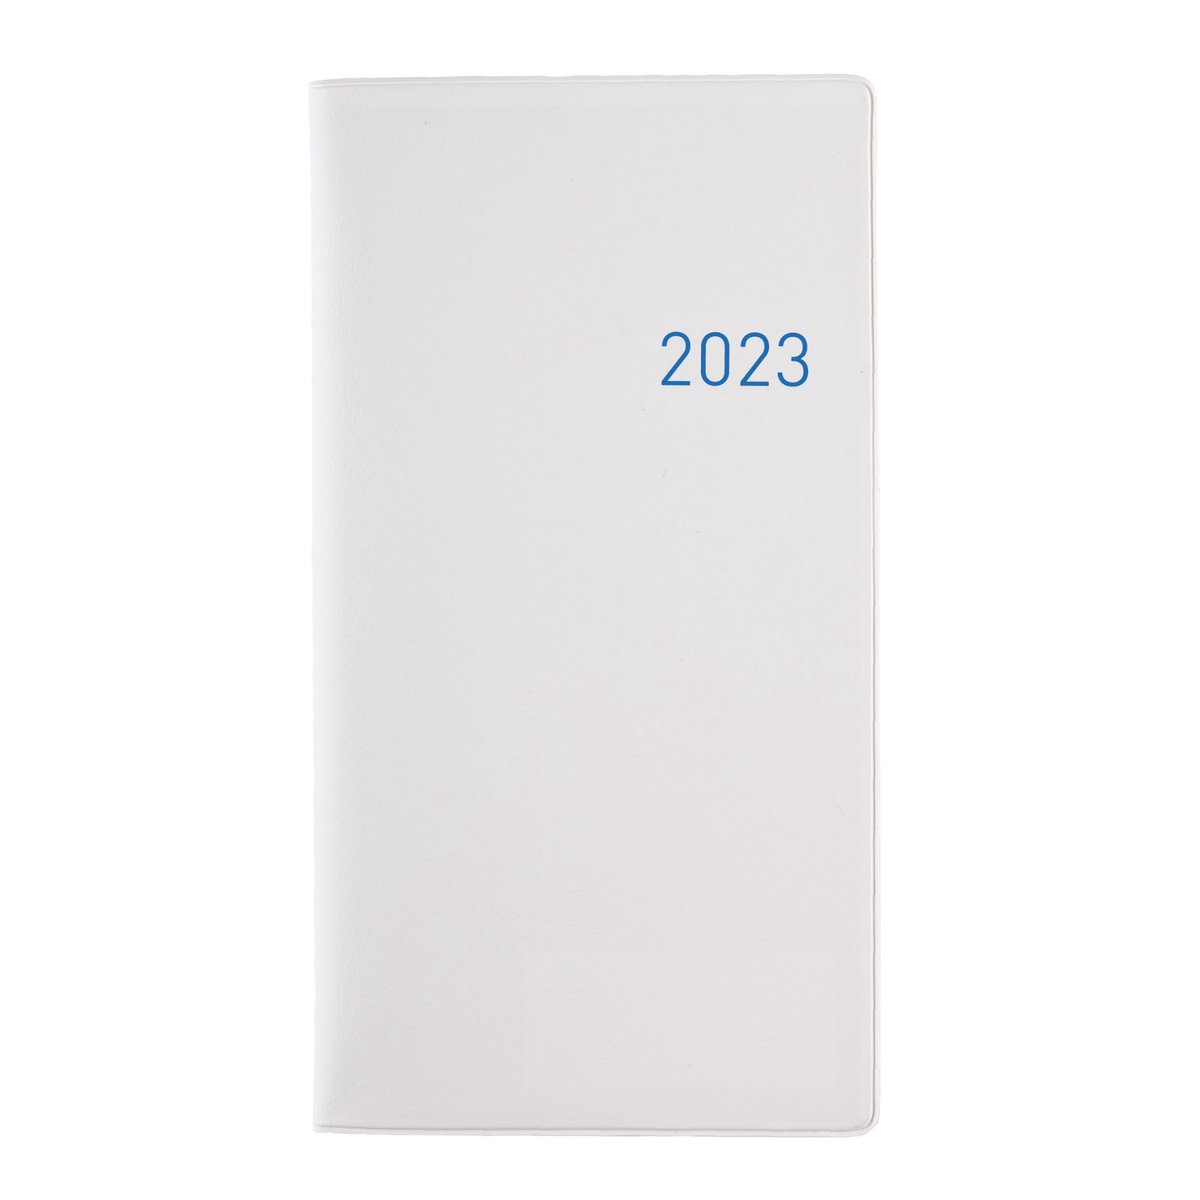 Agenda - 2023 - Zakagenda - Econoom - Wit - Nederlands